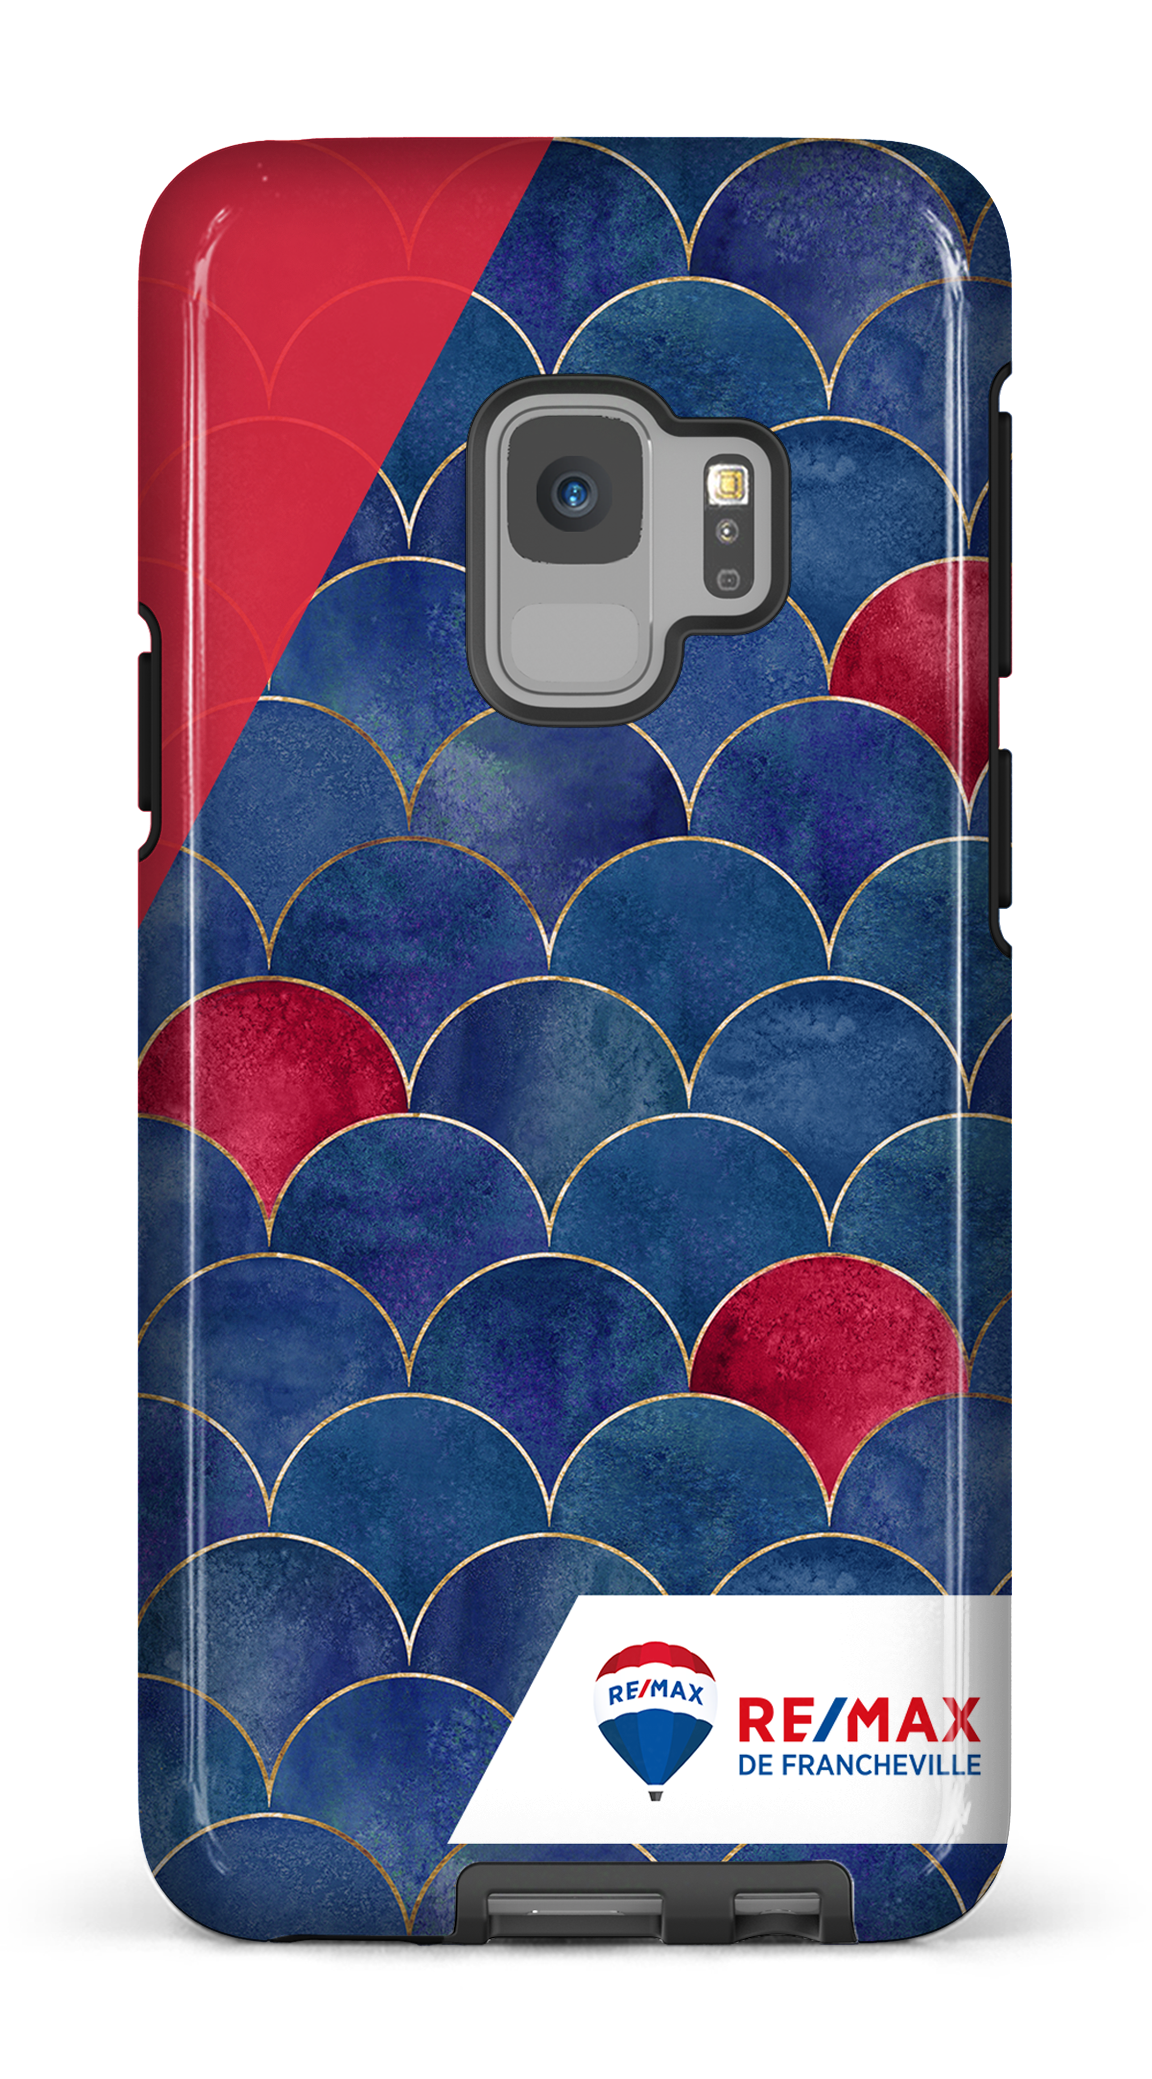 Écailles bicolores de Francheville - Galaxy S9